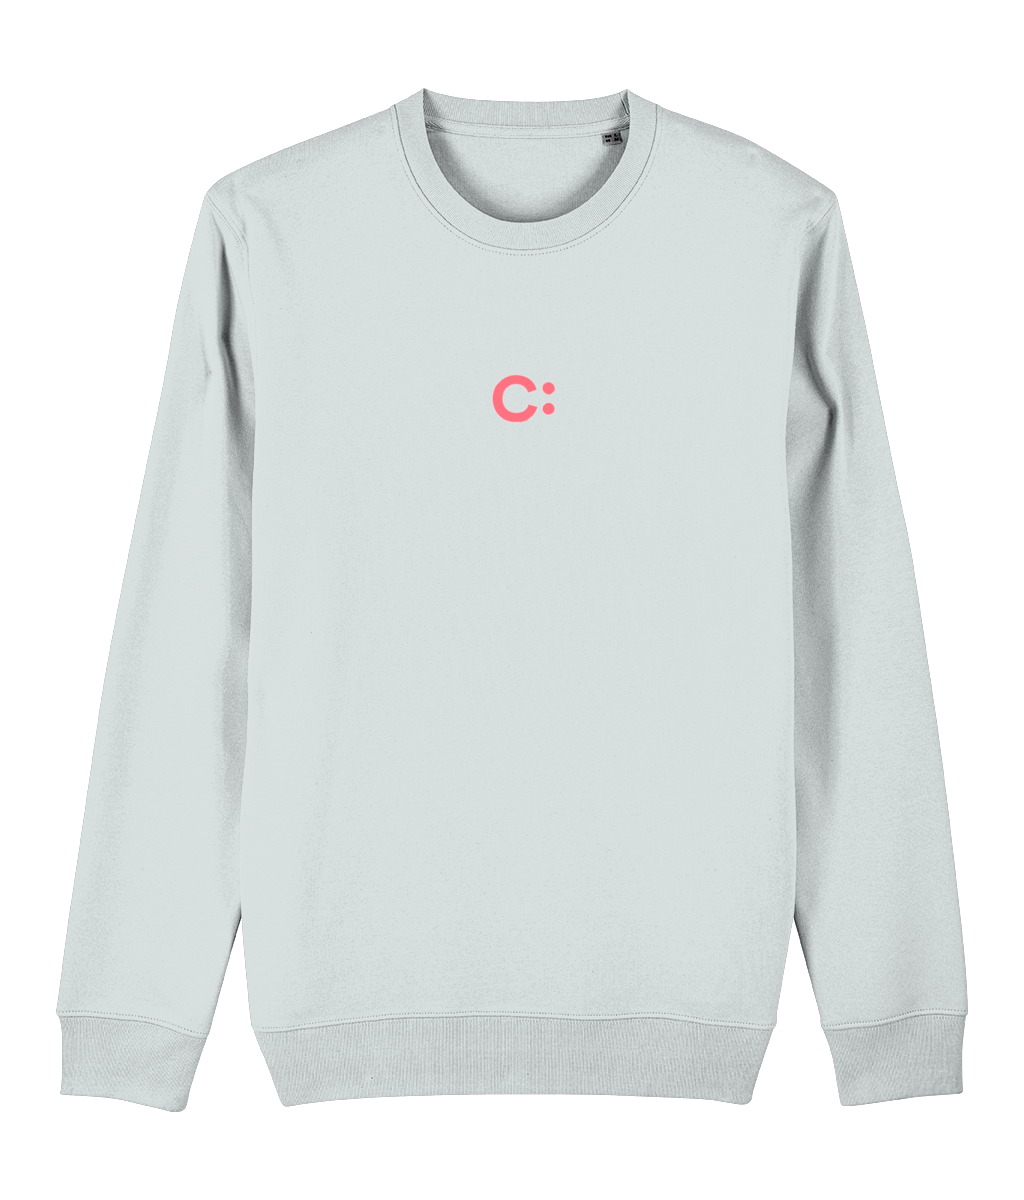 The 'C' Sweatshirt